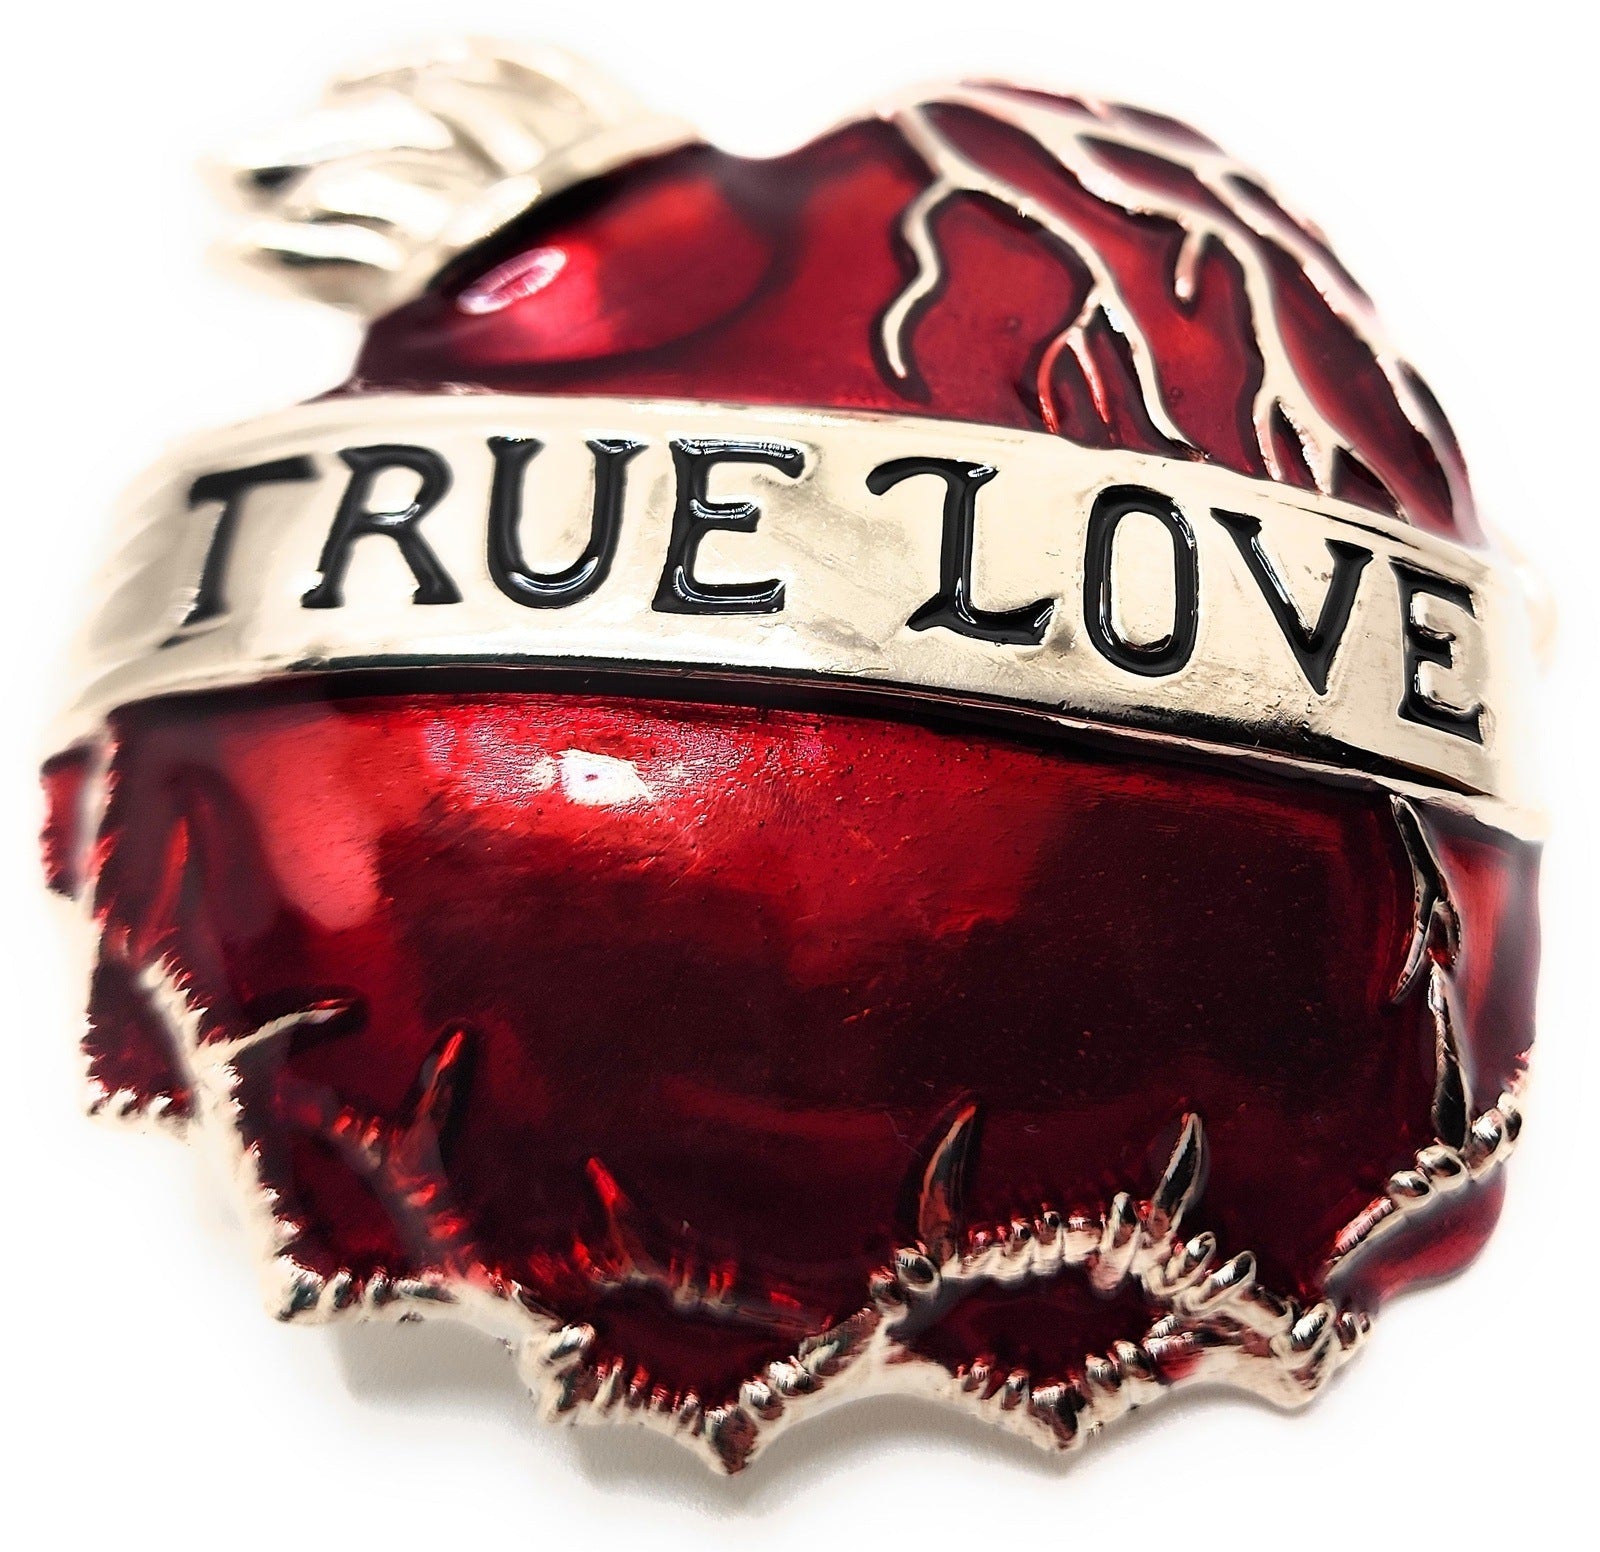 True Love Heart Belt Buckle shop.AxeDr.com Belt Buckle, black, emo, goth, heart, Novelty, Punk, Red, Rockstar, Rockstar Style